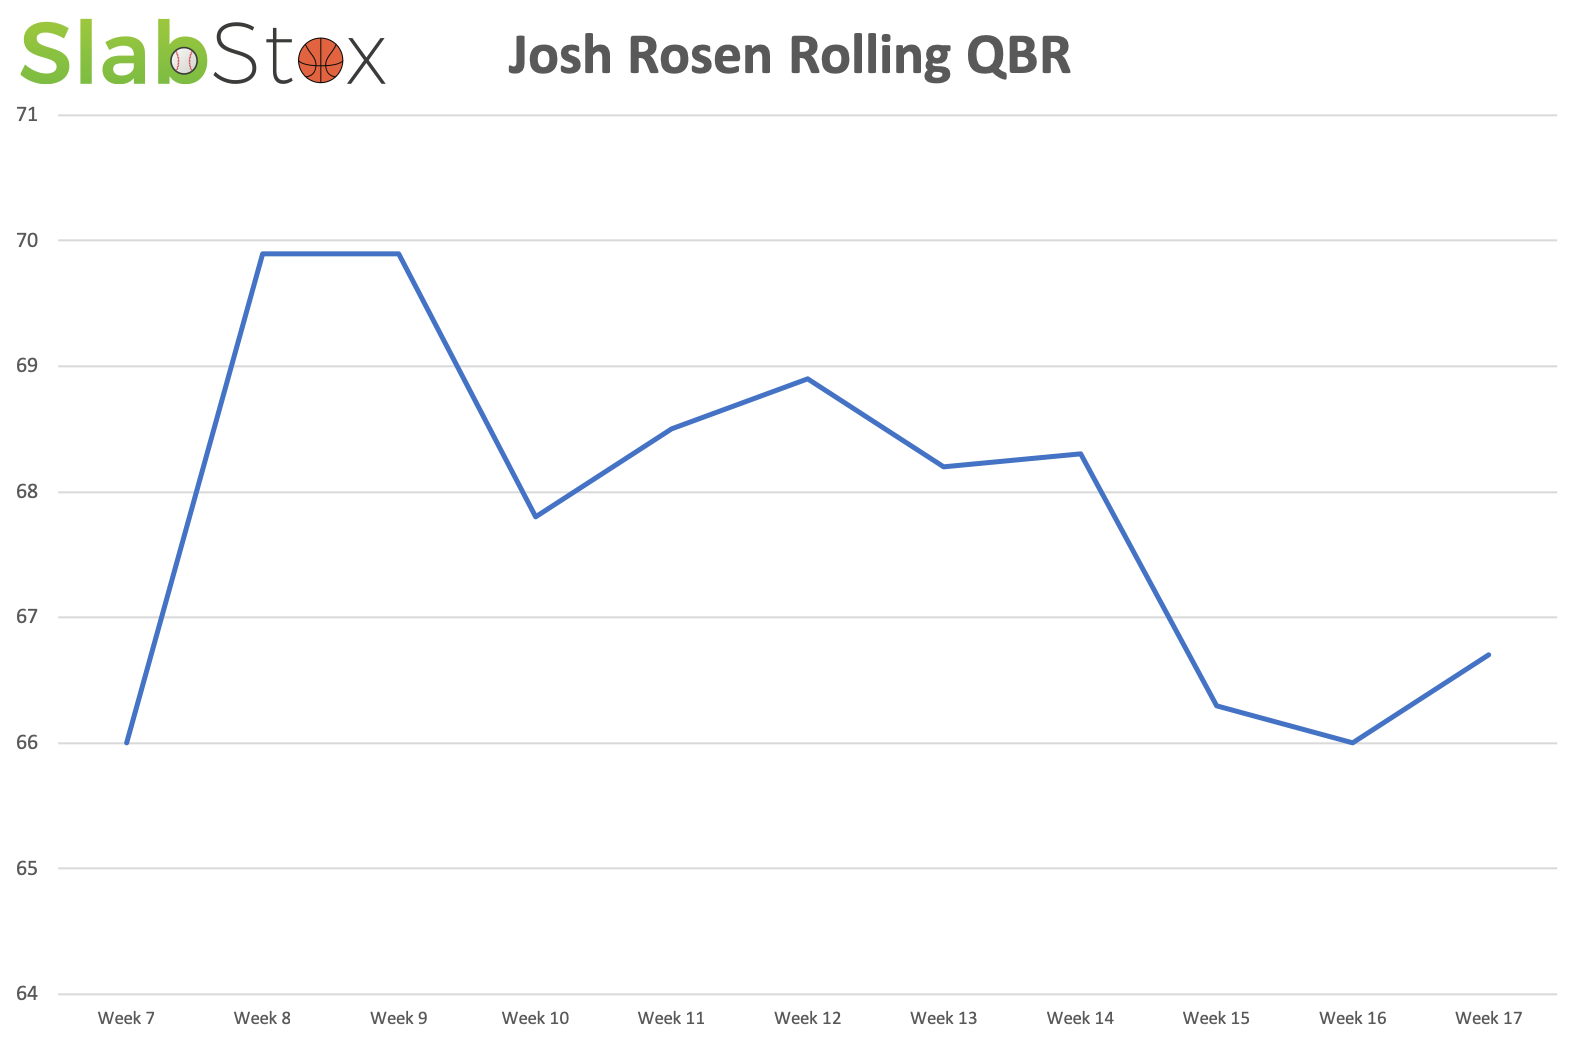 Slabstox infographic on Josh Rosen's Rolling QBR